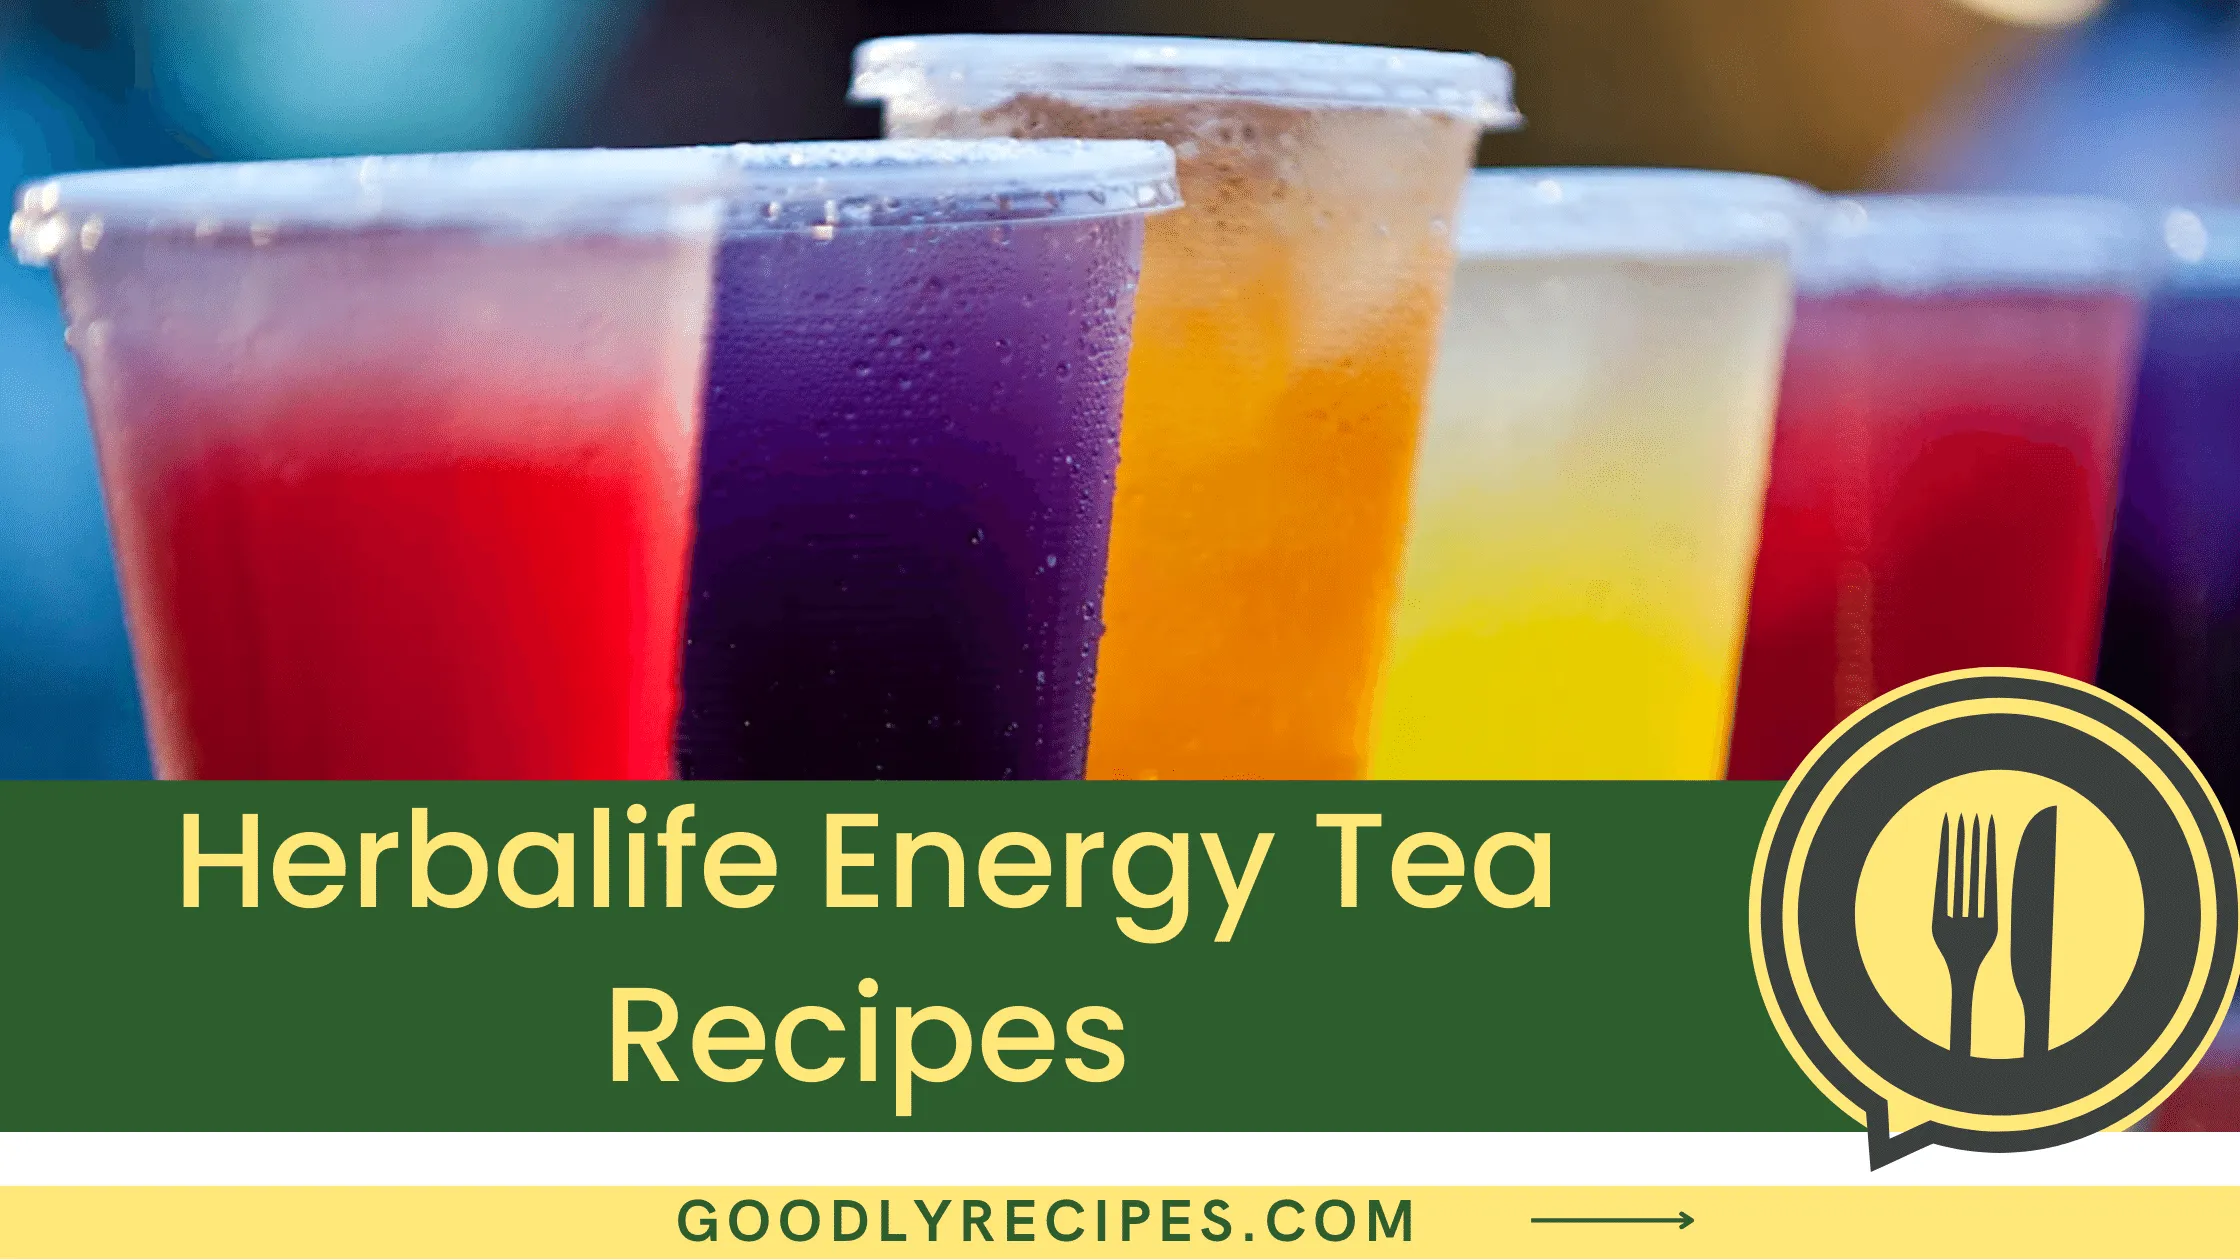 Herbalife Energy Tea Recipes - For Food Lovers